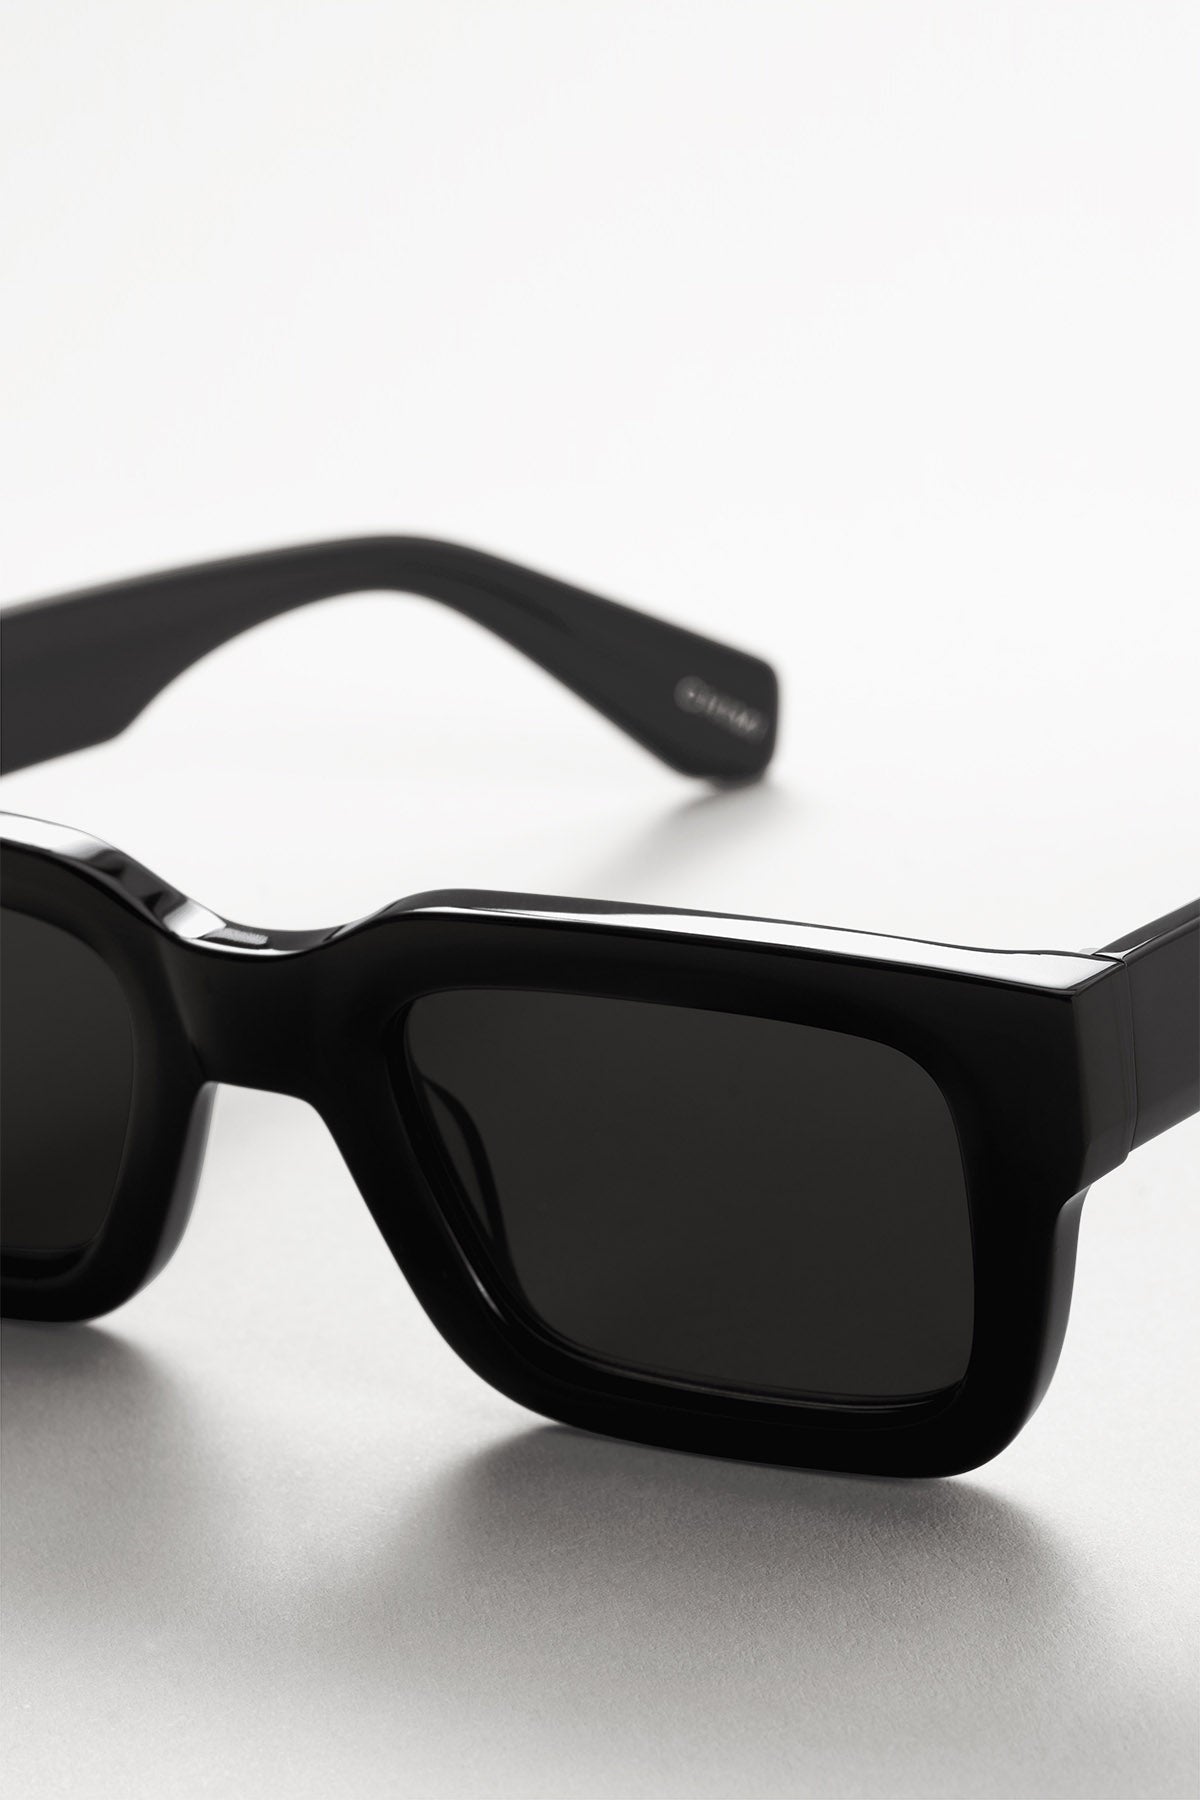 Chimi 05 Sunglasses Black Detail-22133139243201